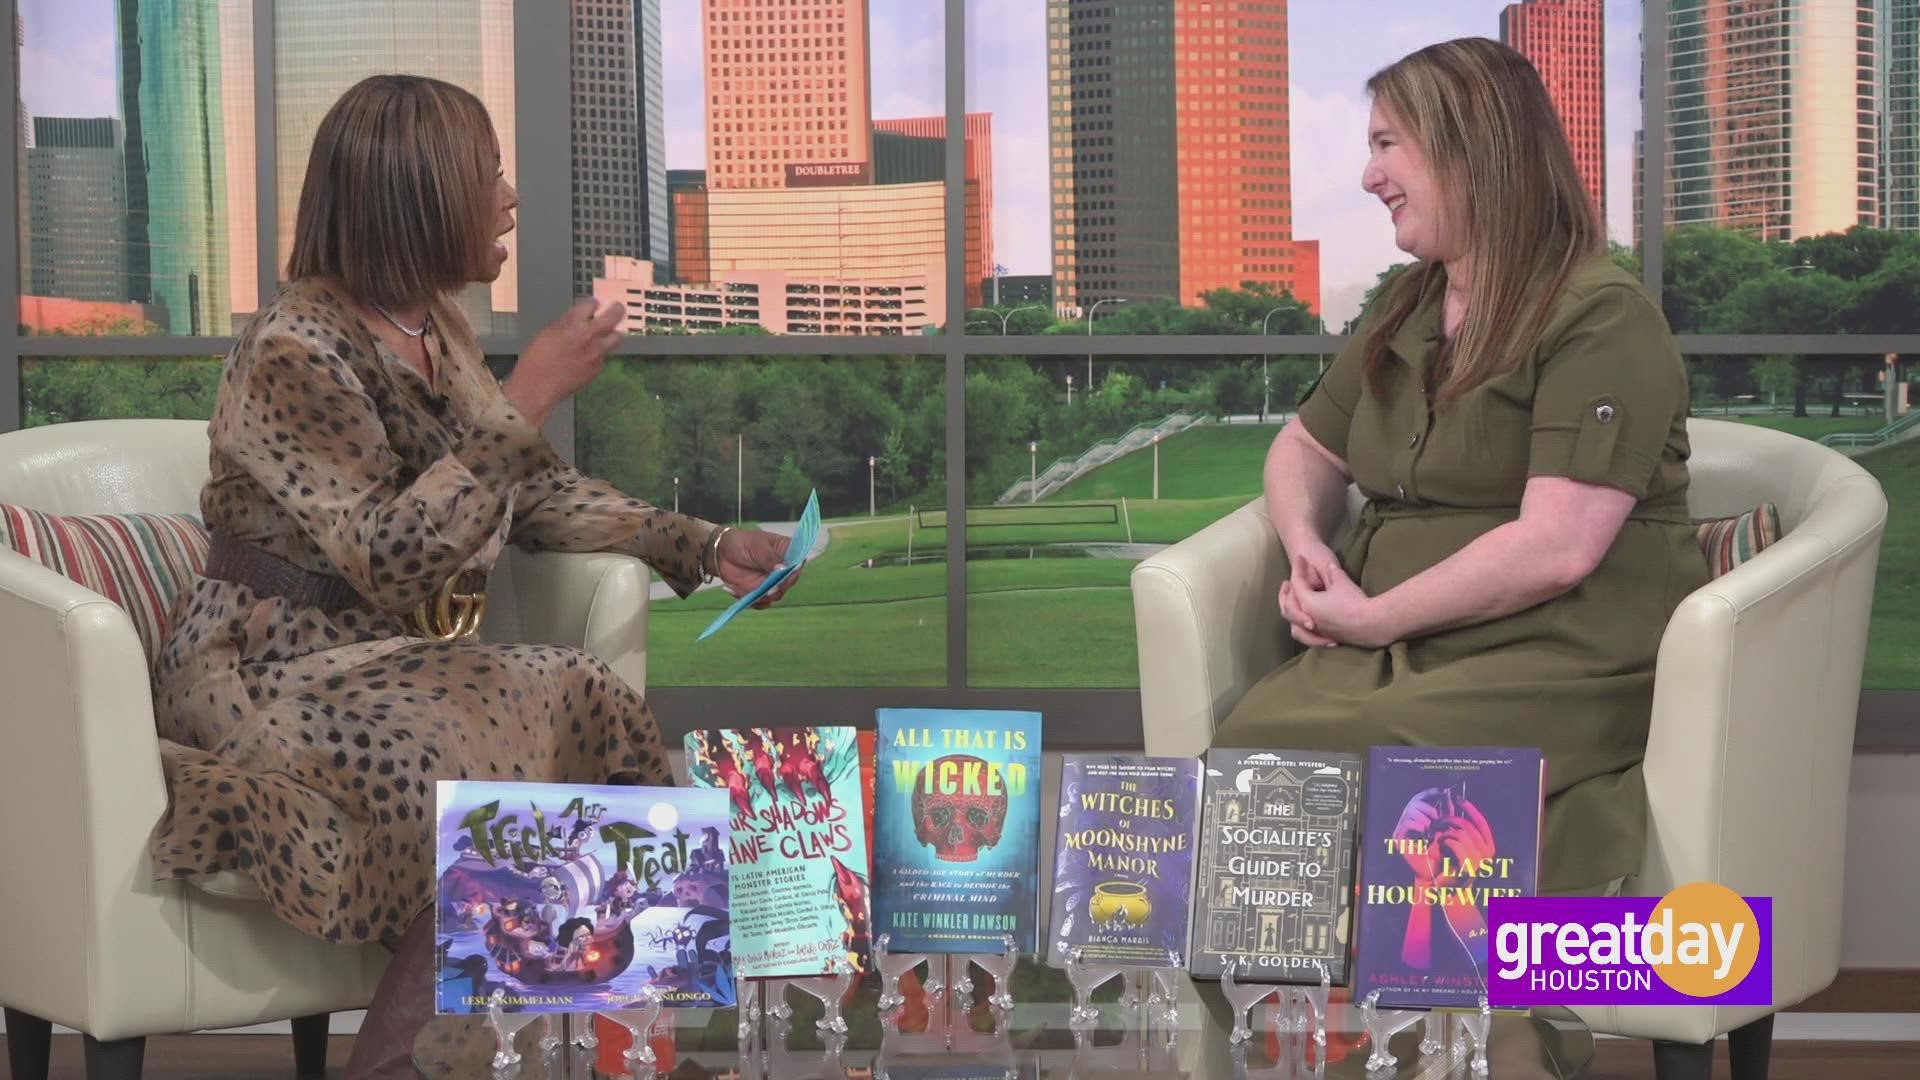 Author Kristen Bird shares her top Halloween book recommendations.